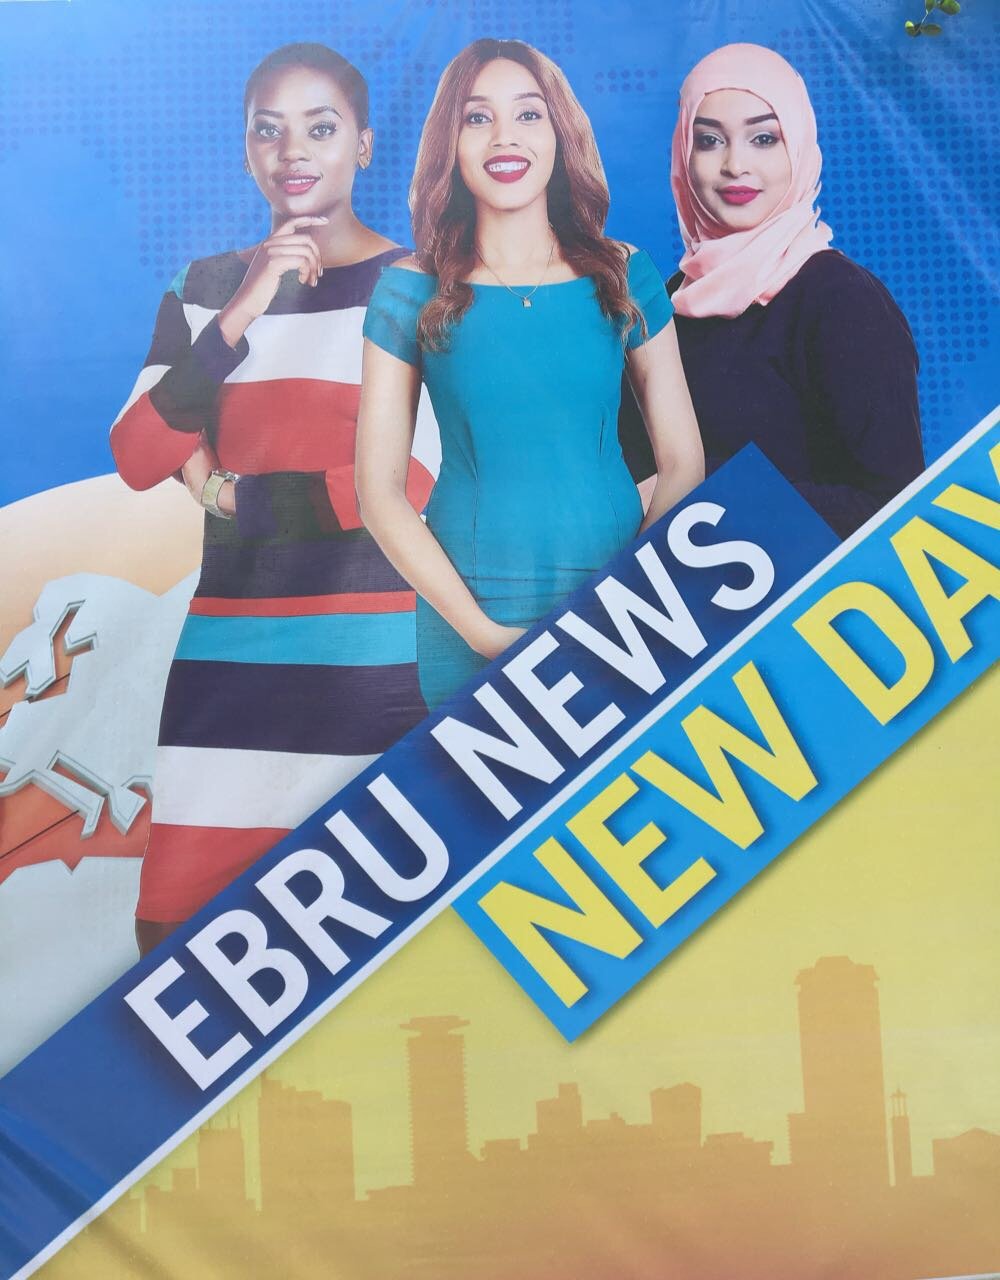  Ebru TV's billboard